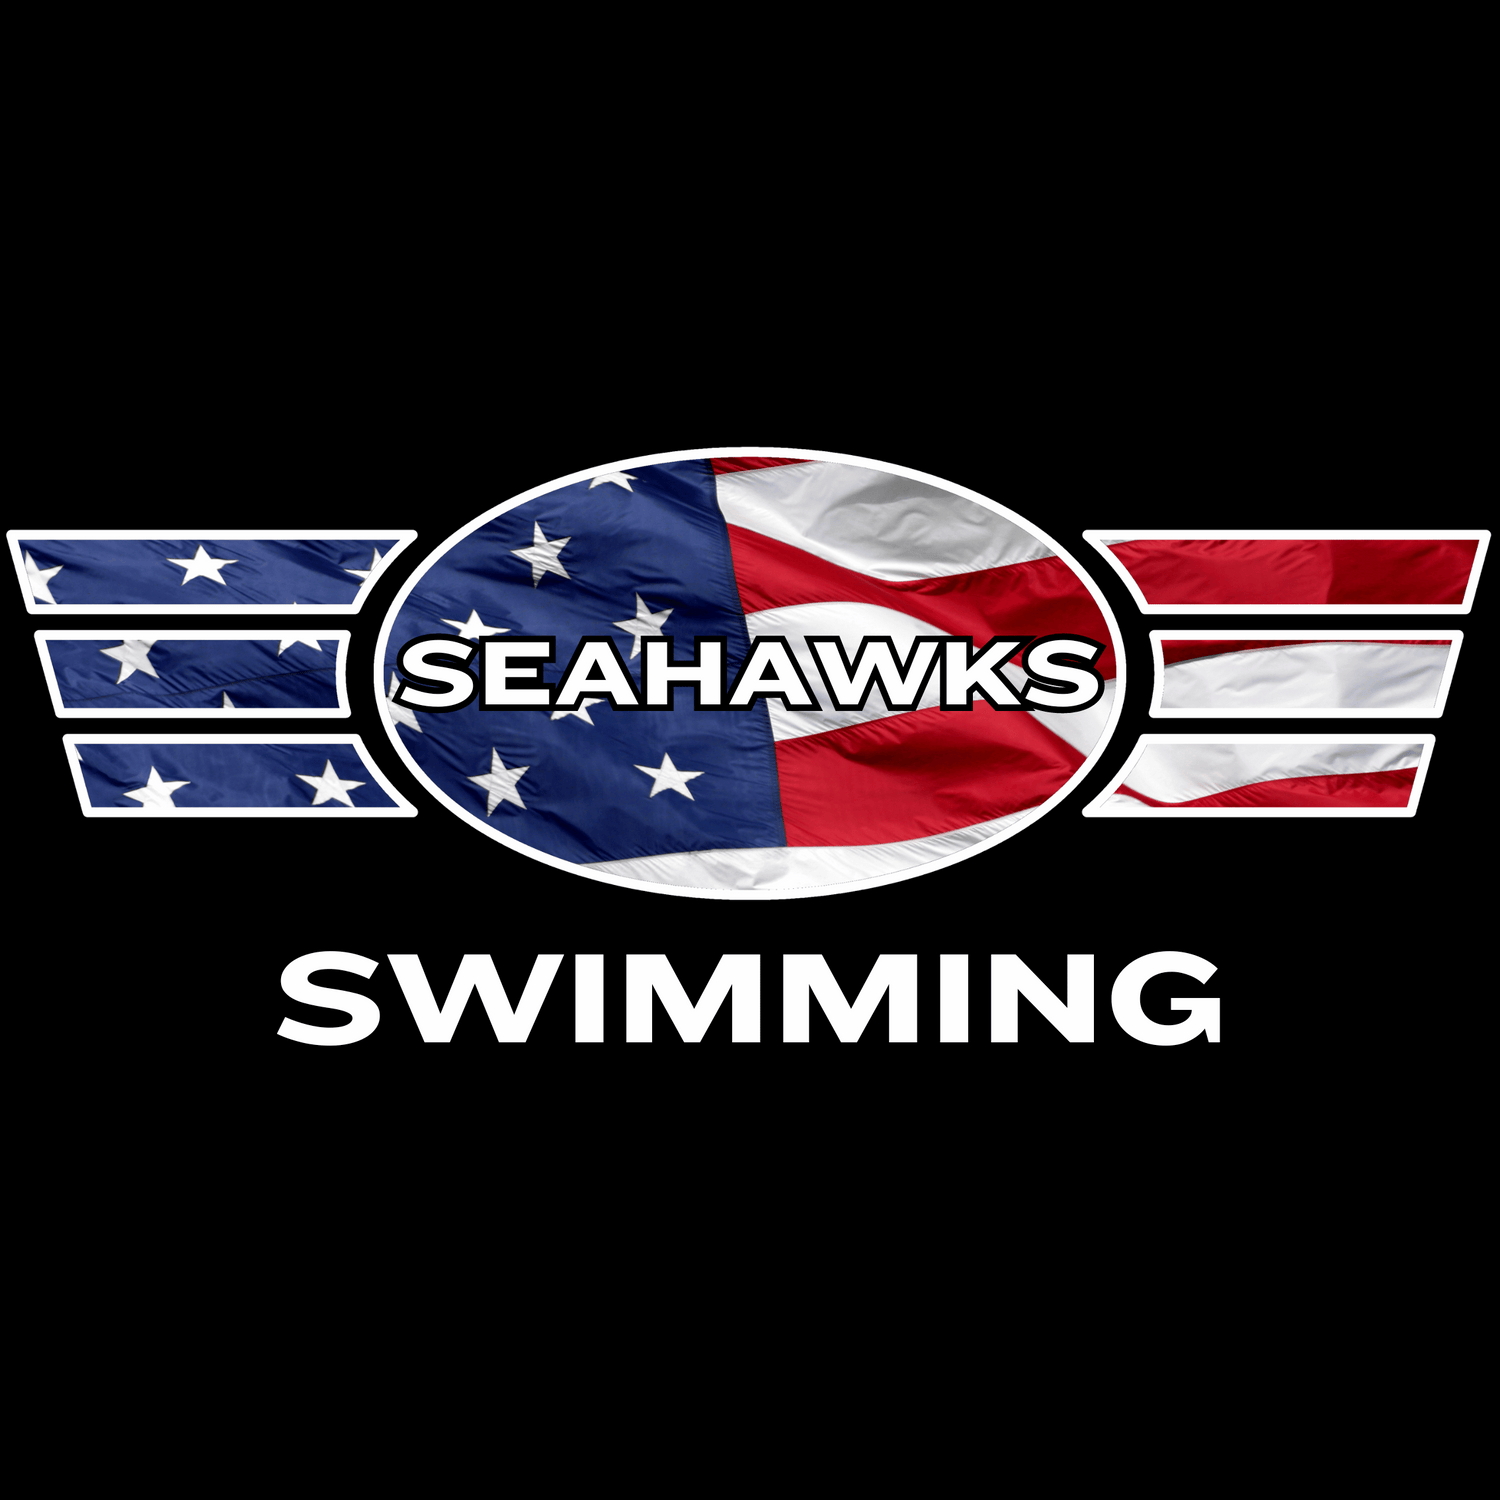 SEAHAWKS Swimming